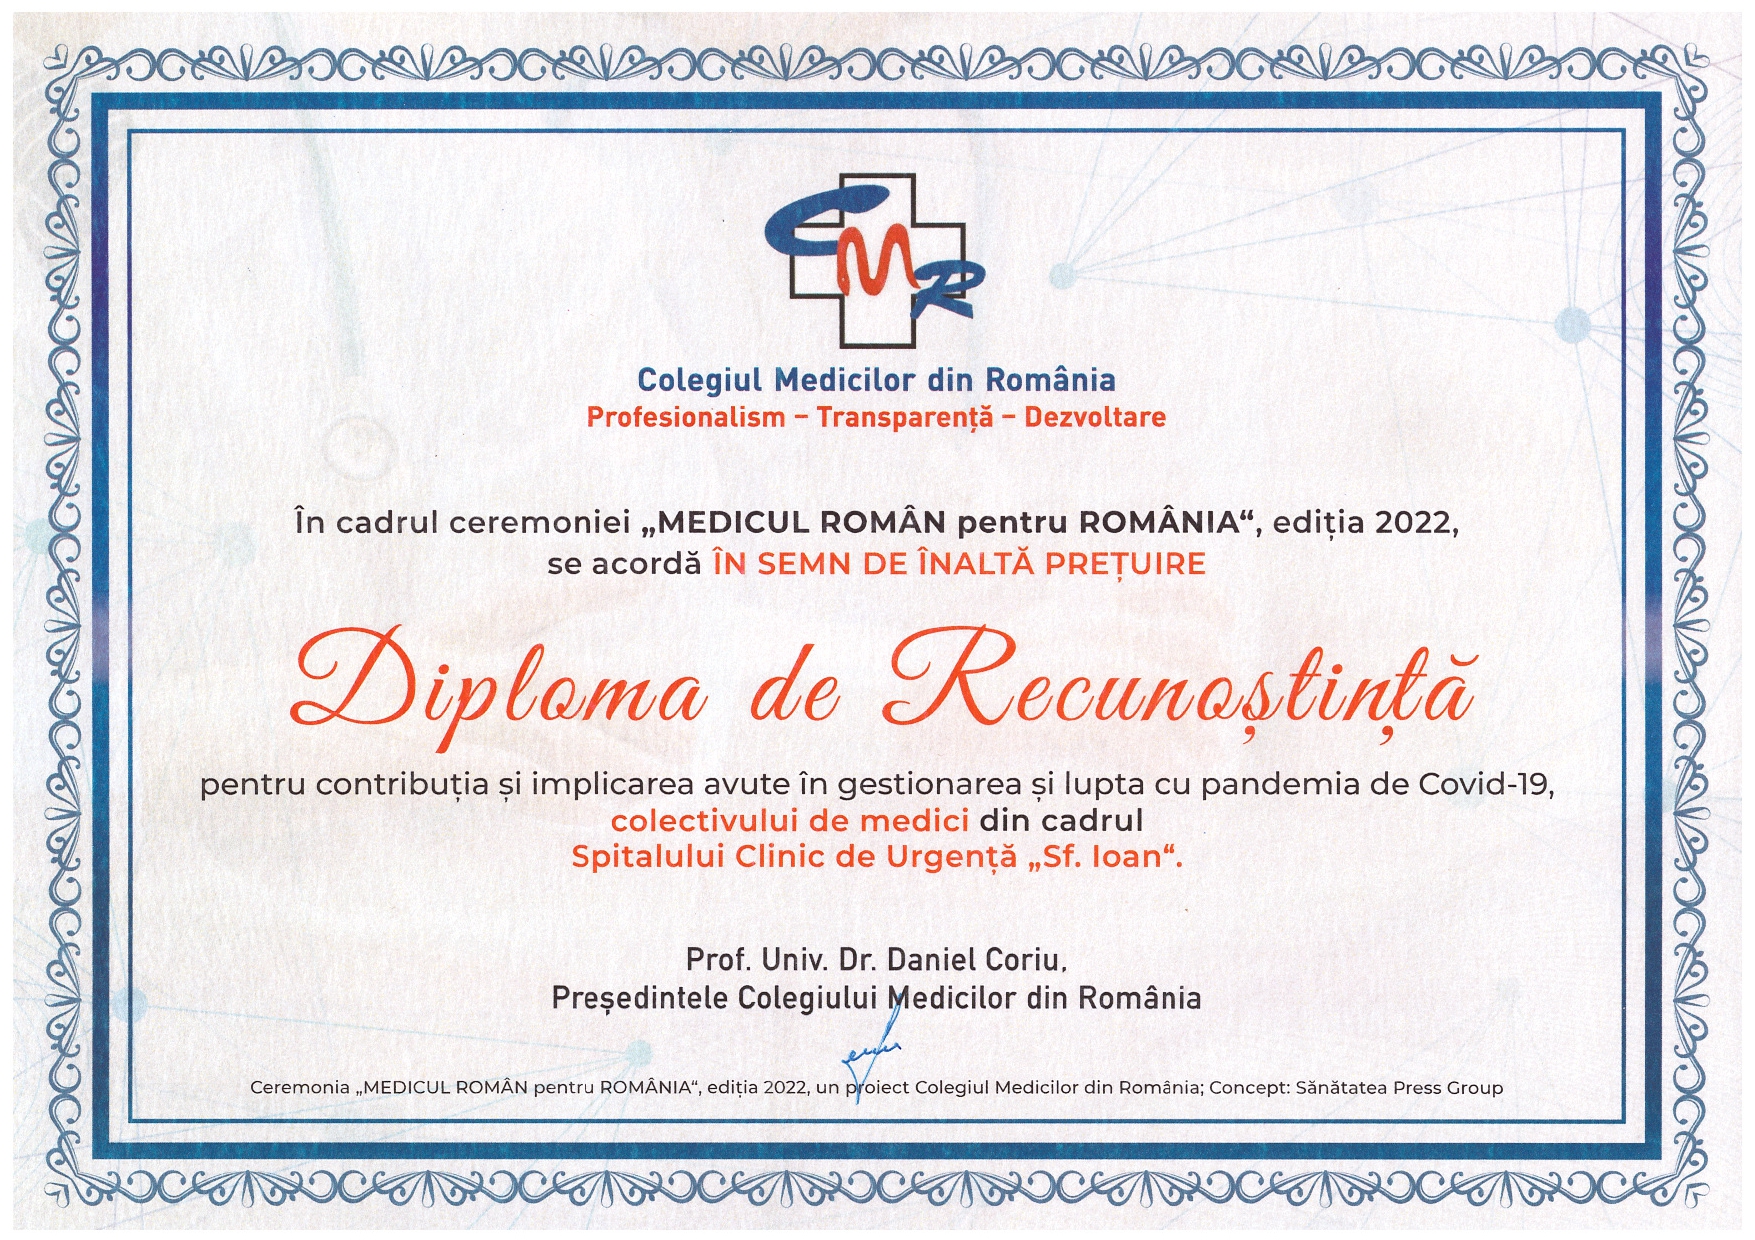 colegiul_medicilor_din_romania_diploma_de_recunostinta